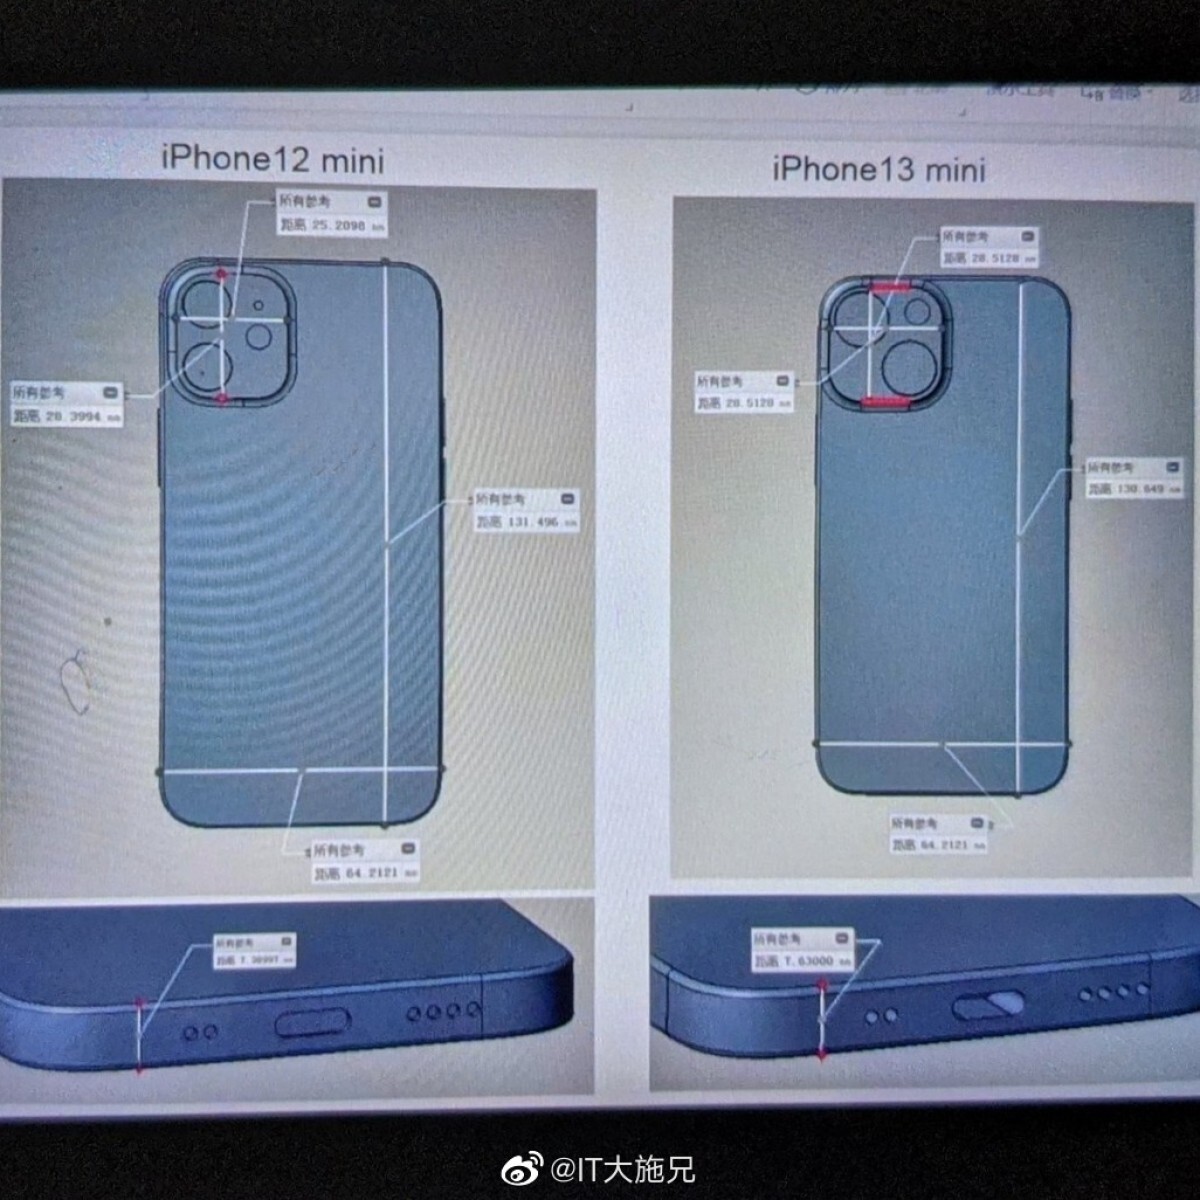 Раскрыты различия между iPhone 12 mini и будущим iPhone 13 mini